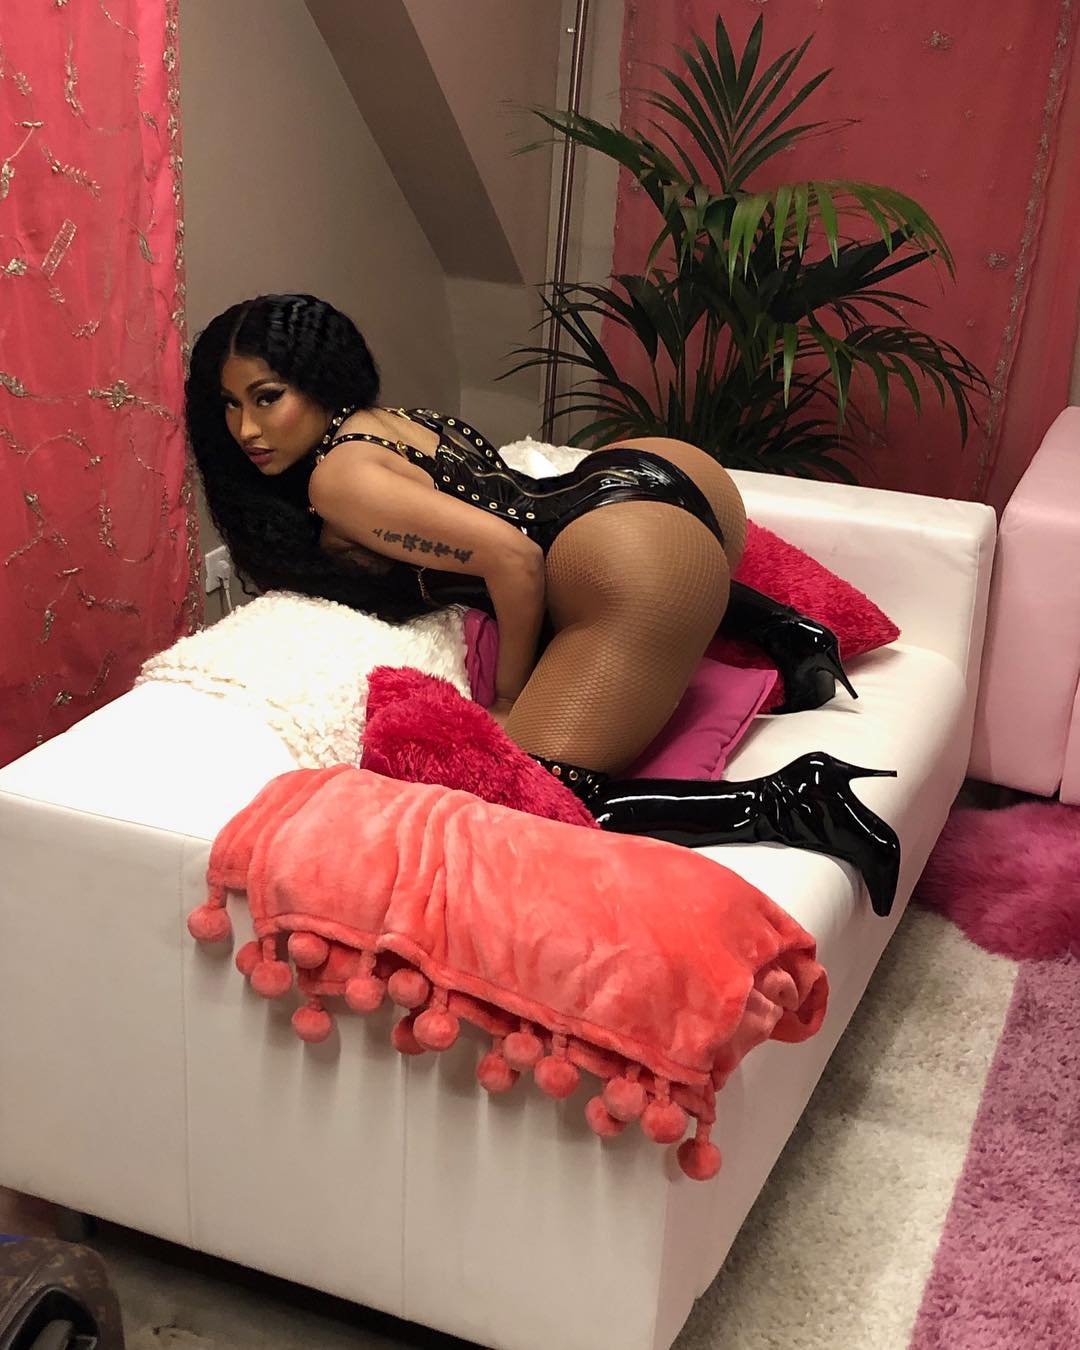 Sexual Seduction! Nicki Minaj Posts A Semi-Nude Photo While Meek